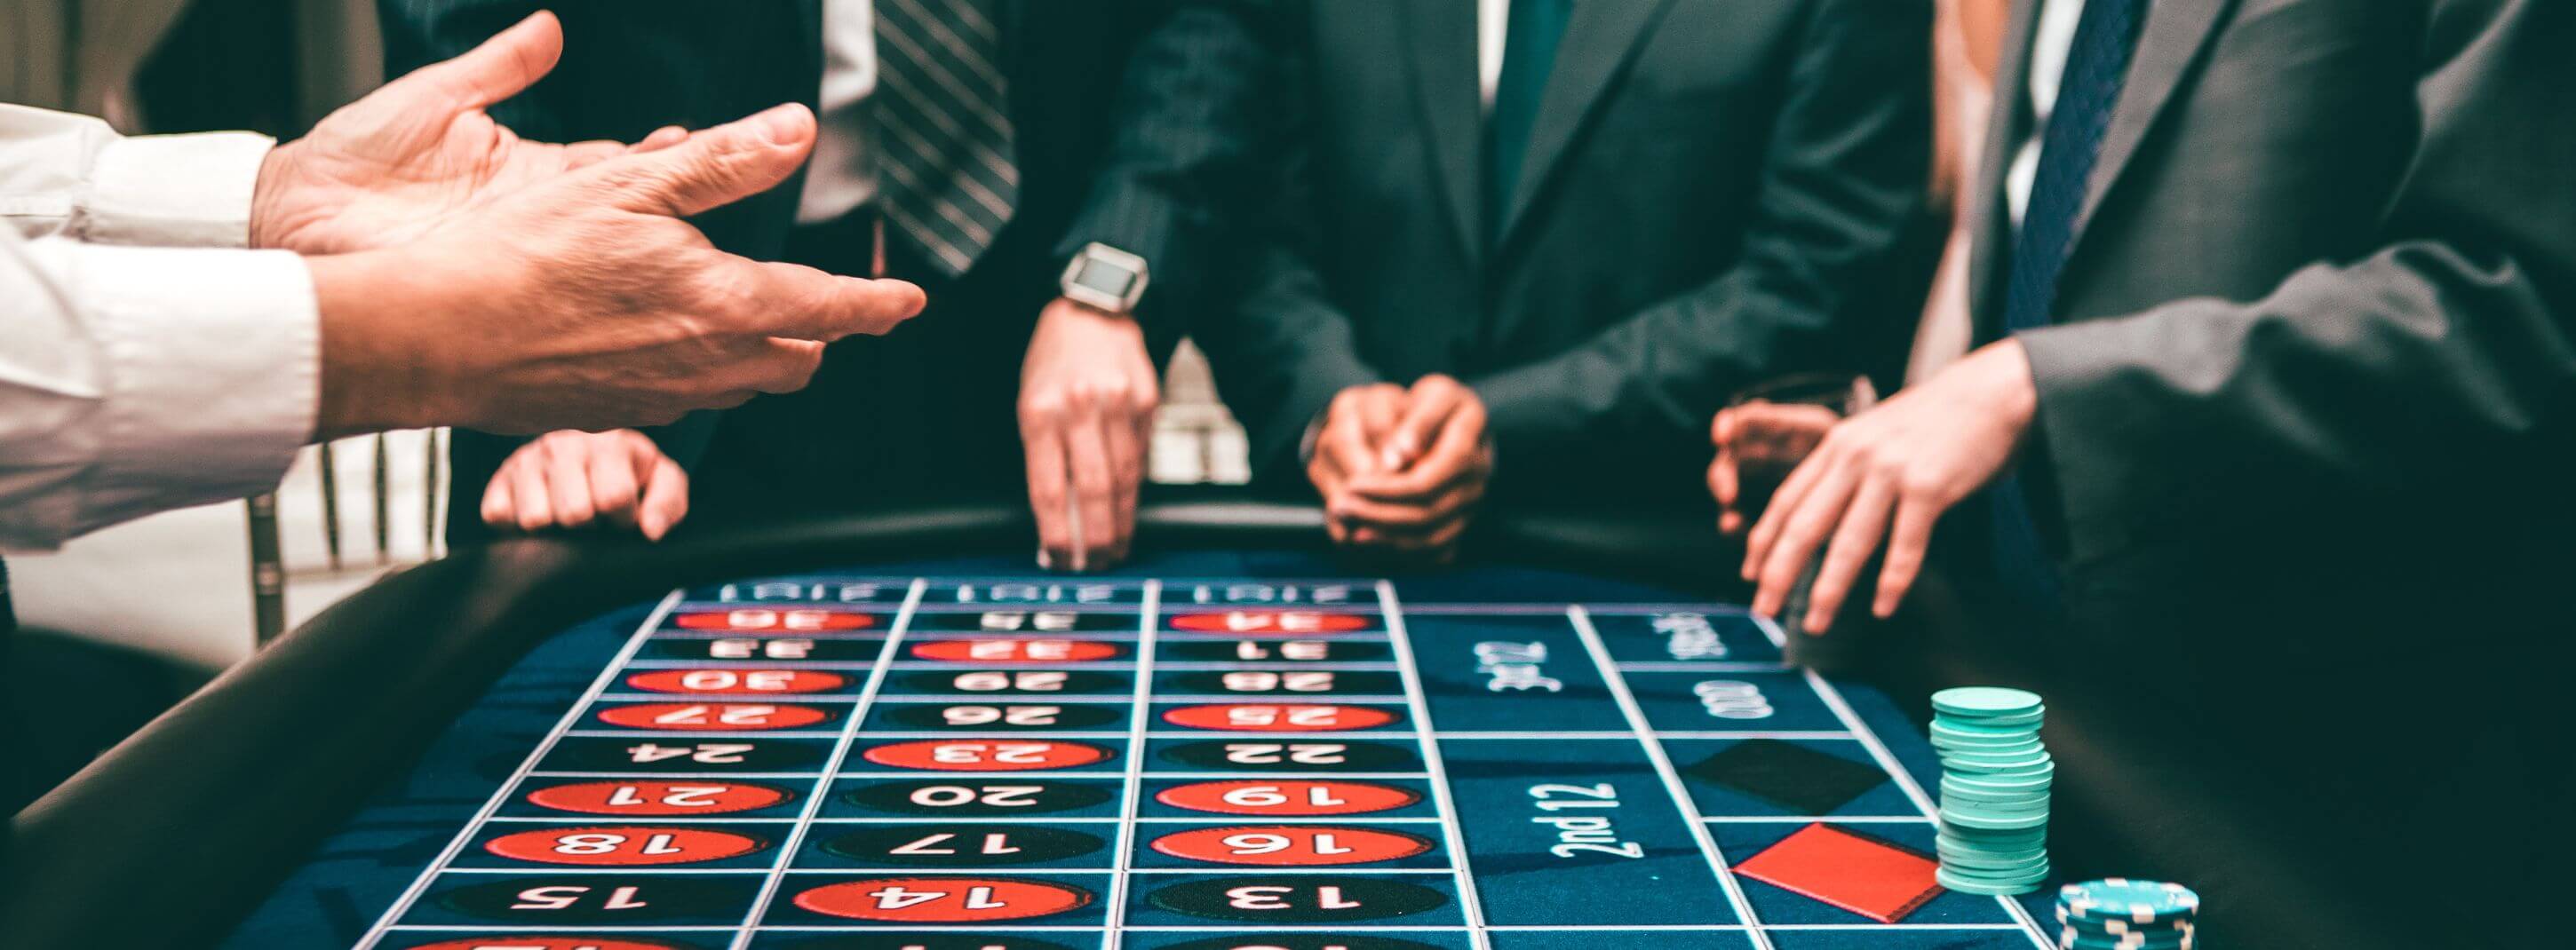 Auckland University: 6% Adult Population Has Gambling Problem